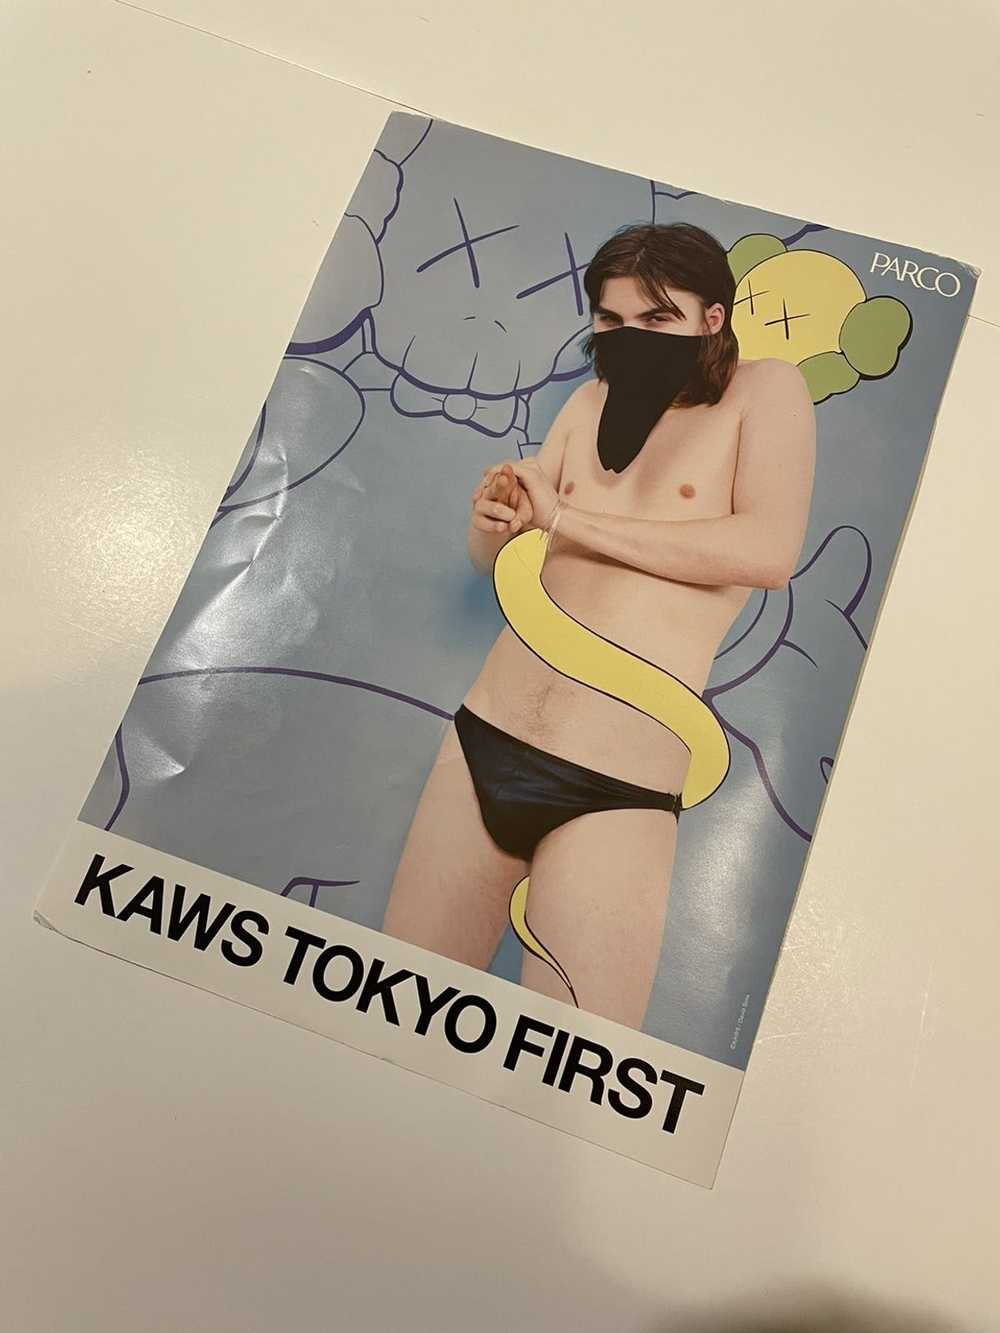 Kaws Kaws Tokyo first poster/ bendy - image 1